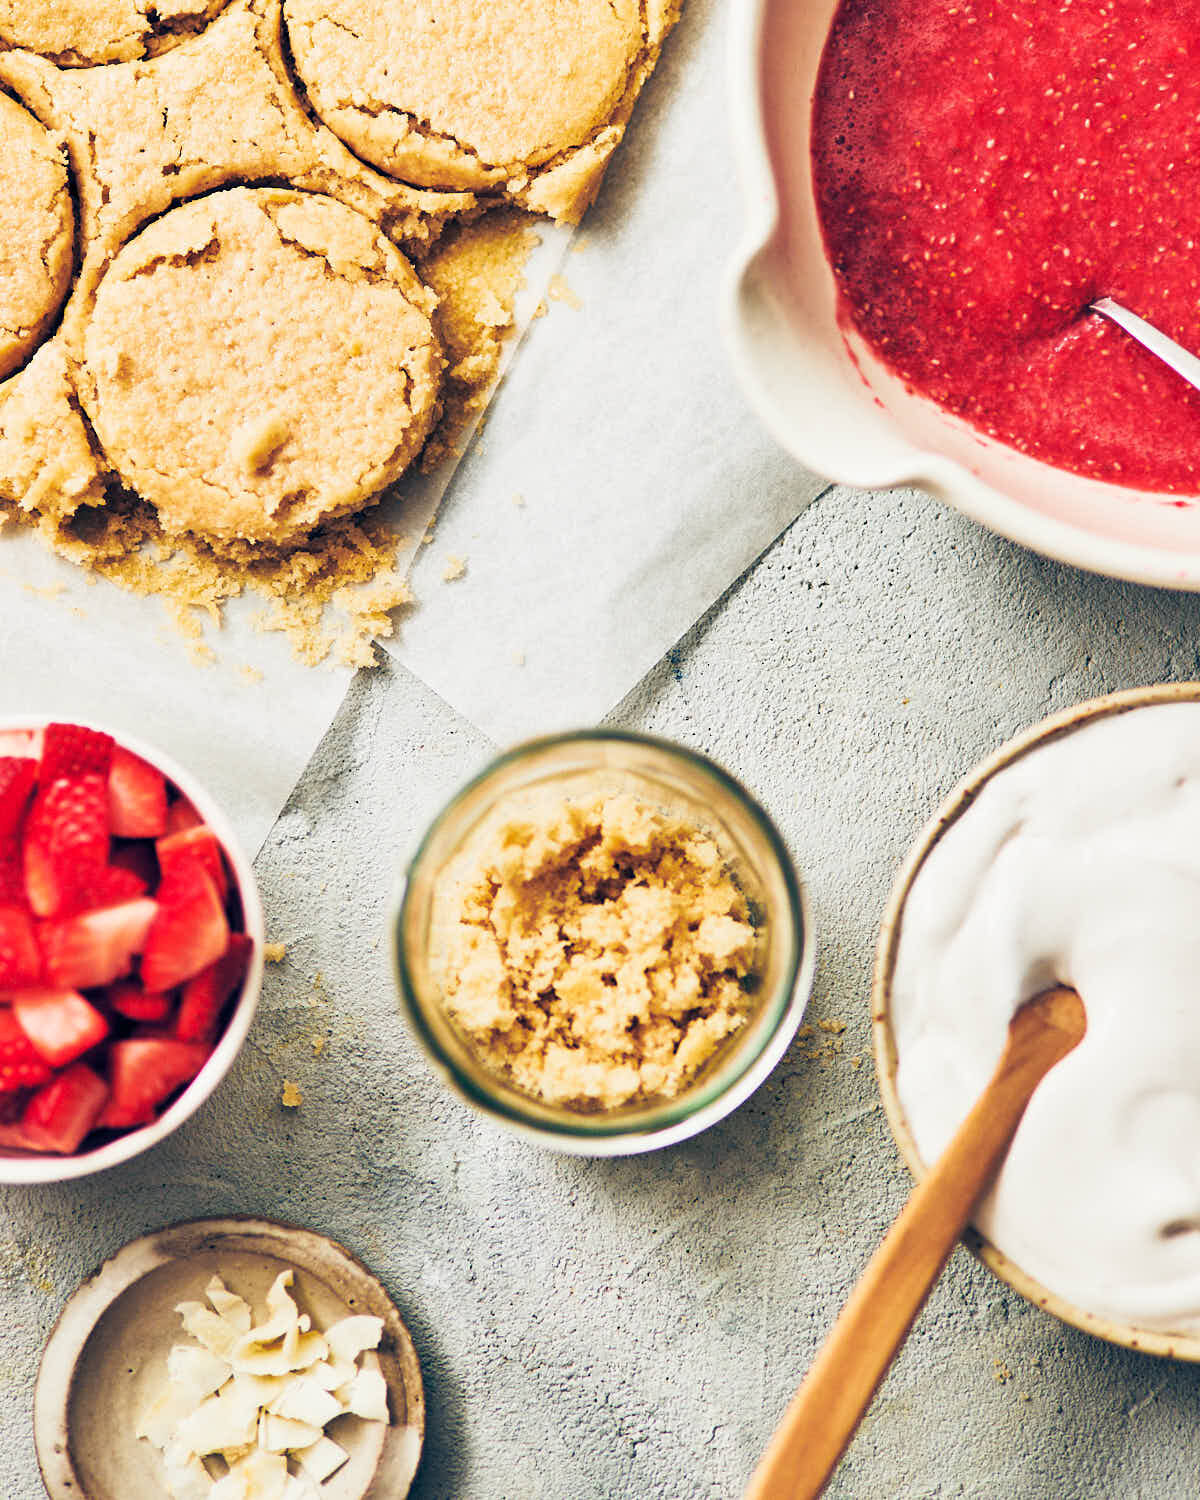 Components for vegan strawberry shortcake trifle: gluten free cake, fresh strawberries, strawberry jam, and whipped cream.